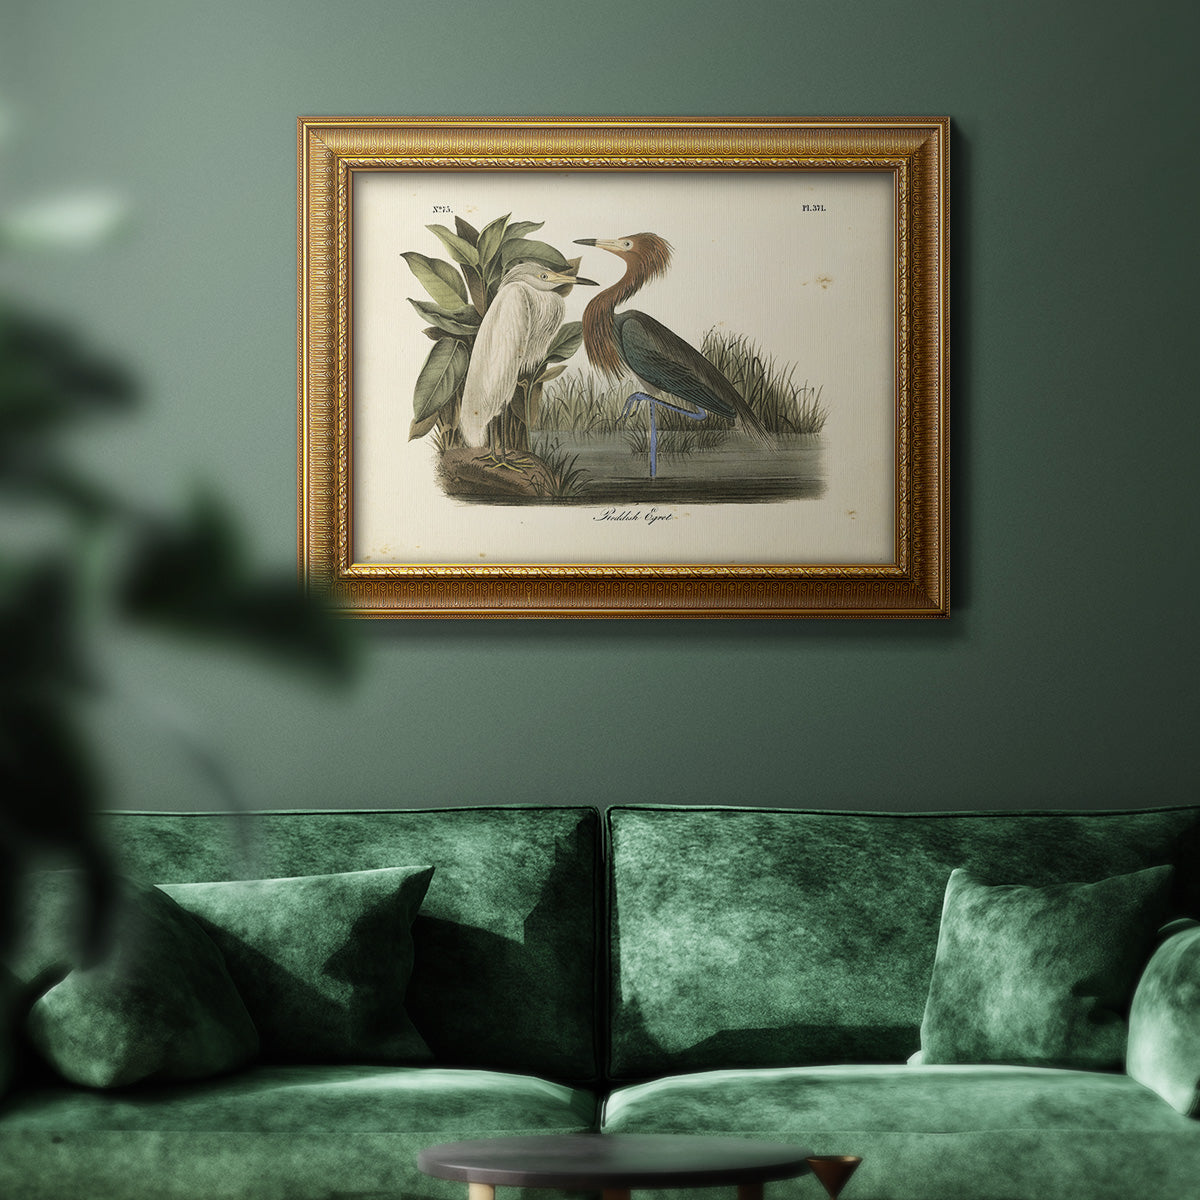 Audubons Reddish Egret Premium Framed Canvas- Ready to Hang